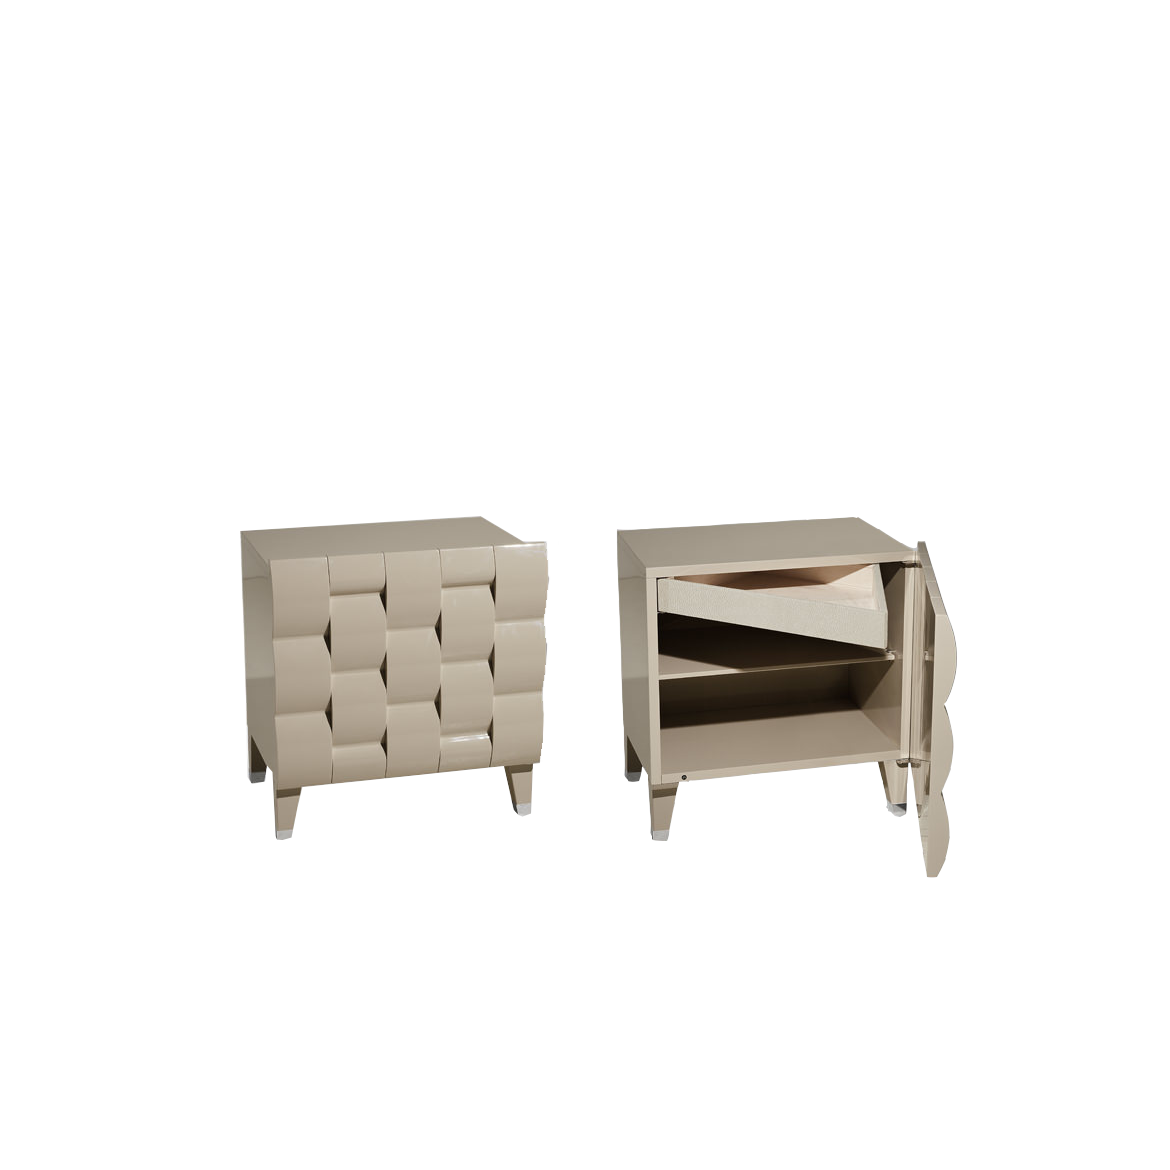 Тумба Astoria Bedside Table, дизайн Fendi Casa